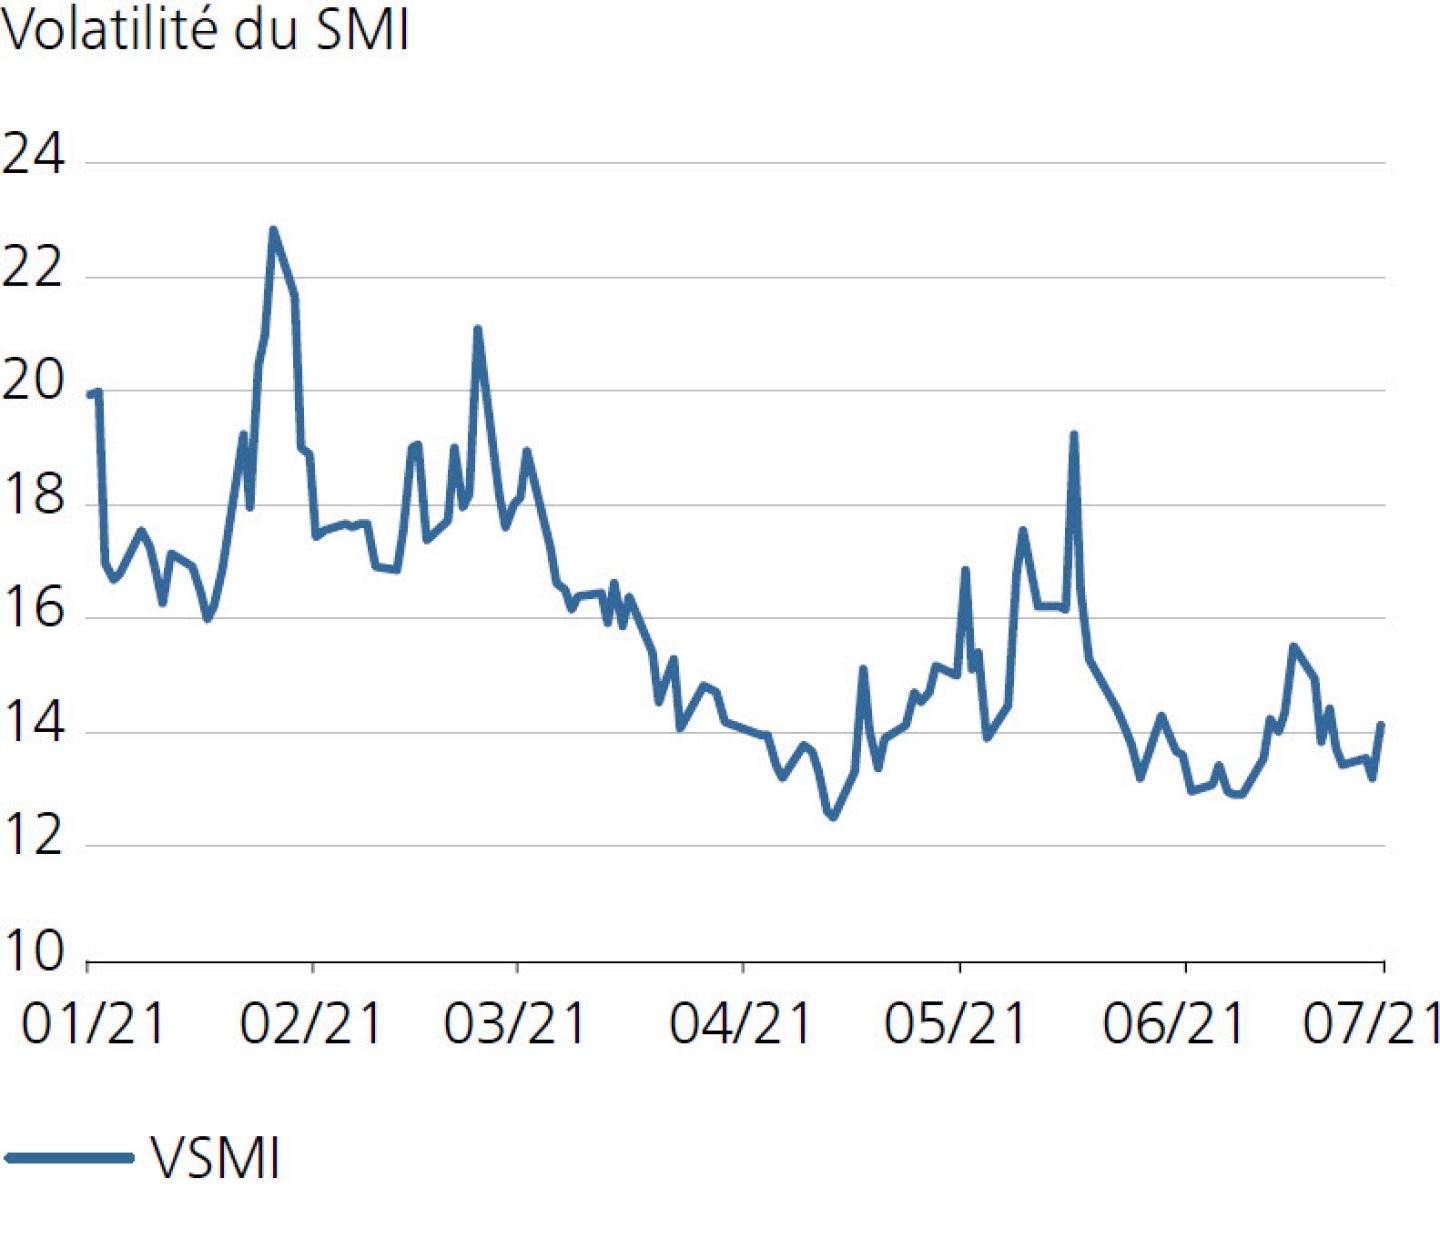 Volatilité du SMI (VSMI)